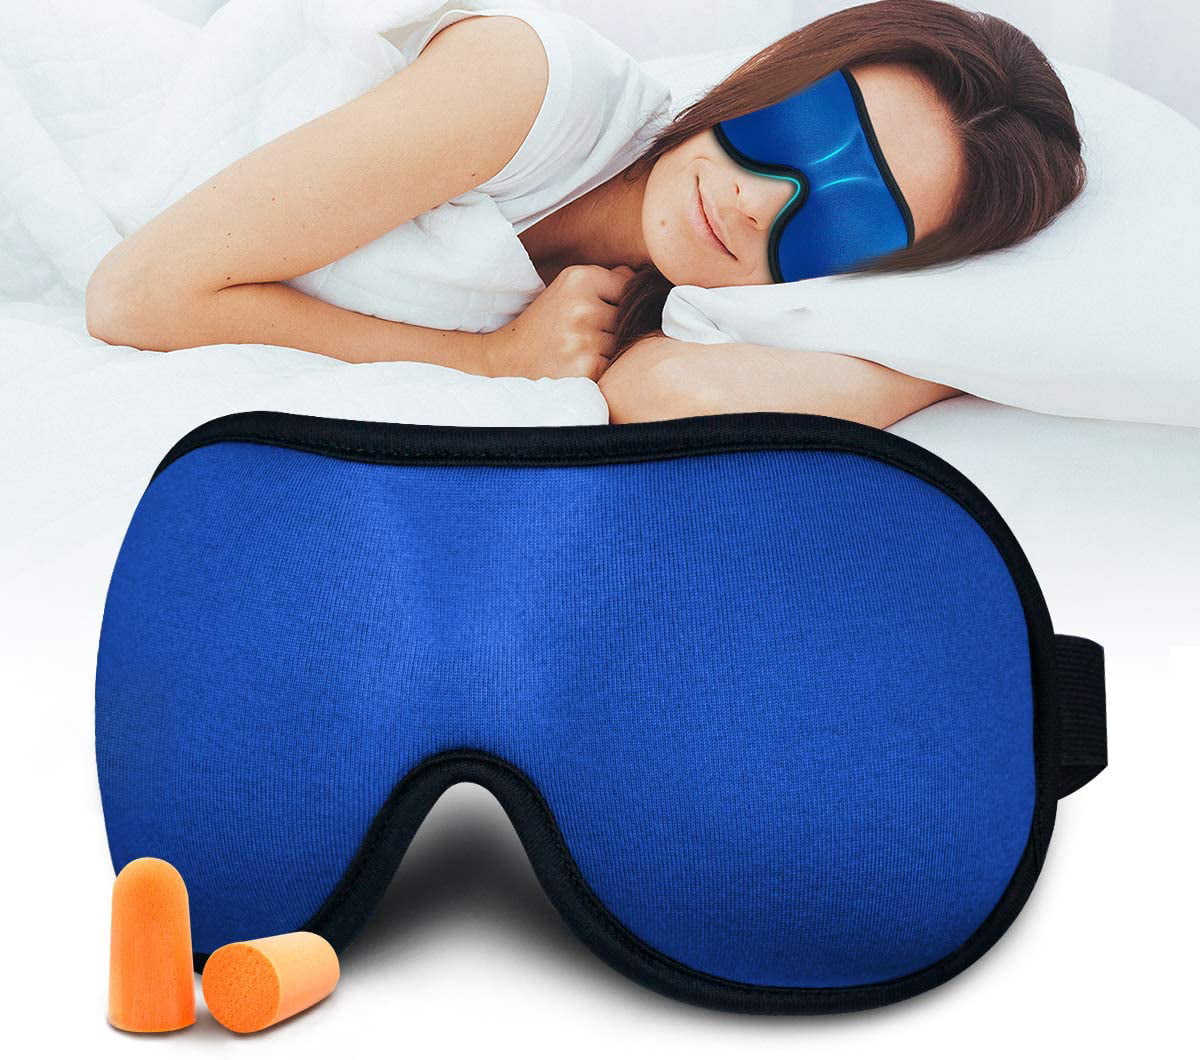 3D Sleep Mask Eye Mask Blindfold Cover for Sleeping Contoured Shape Supersoft Lightweight Comfortable Eyemask Purple 